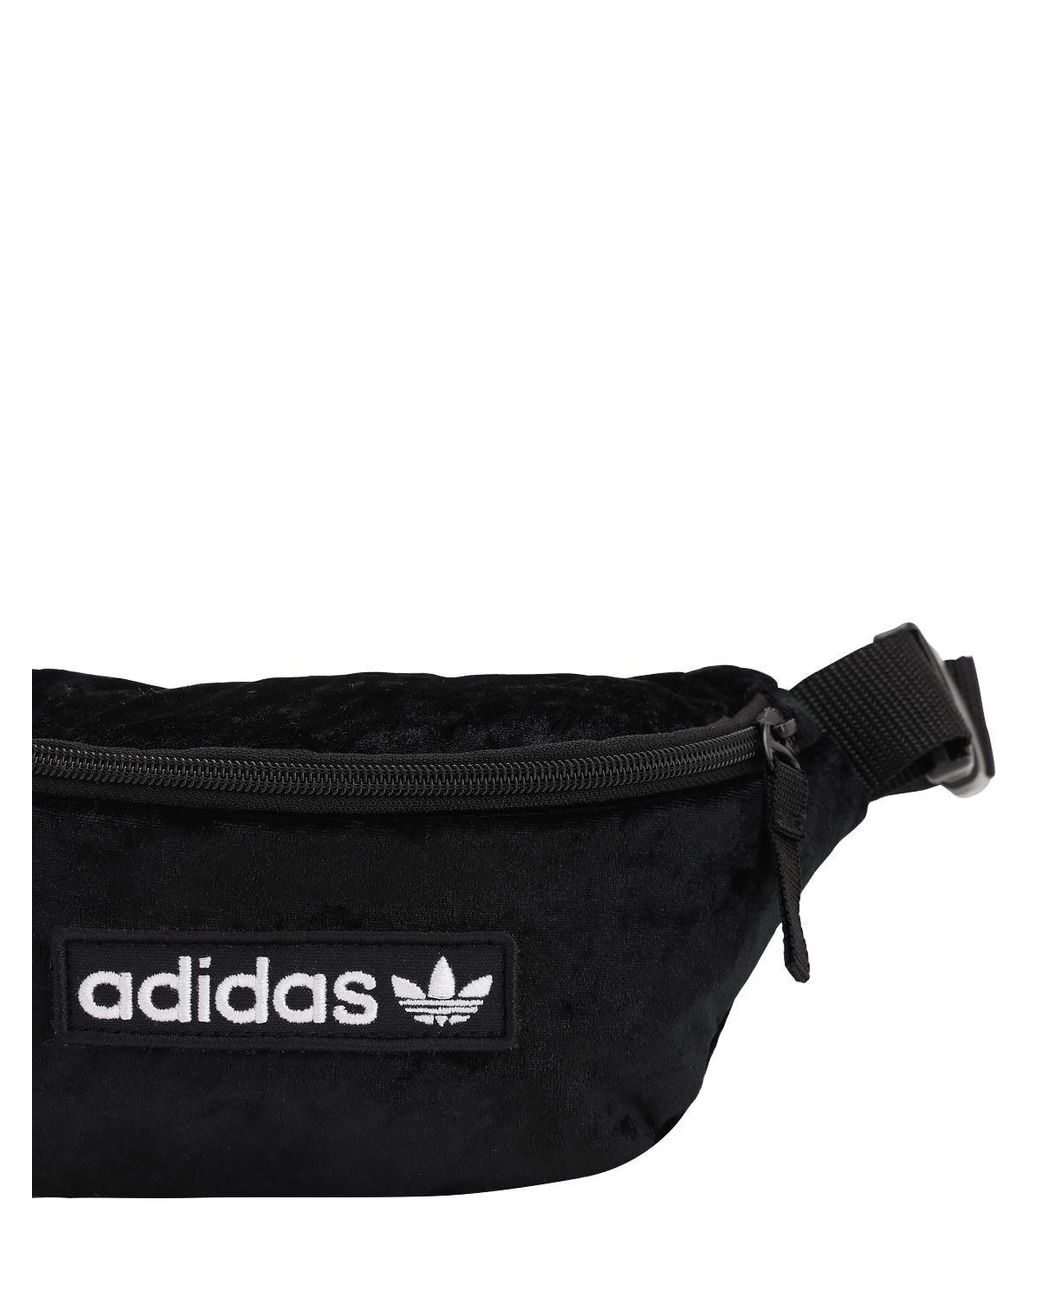 adidas Originals Velvet Belt Bag in Black | Lyst